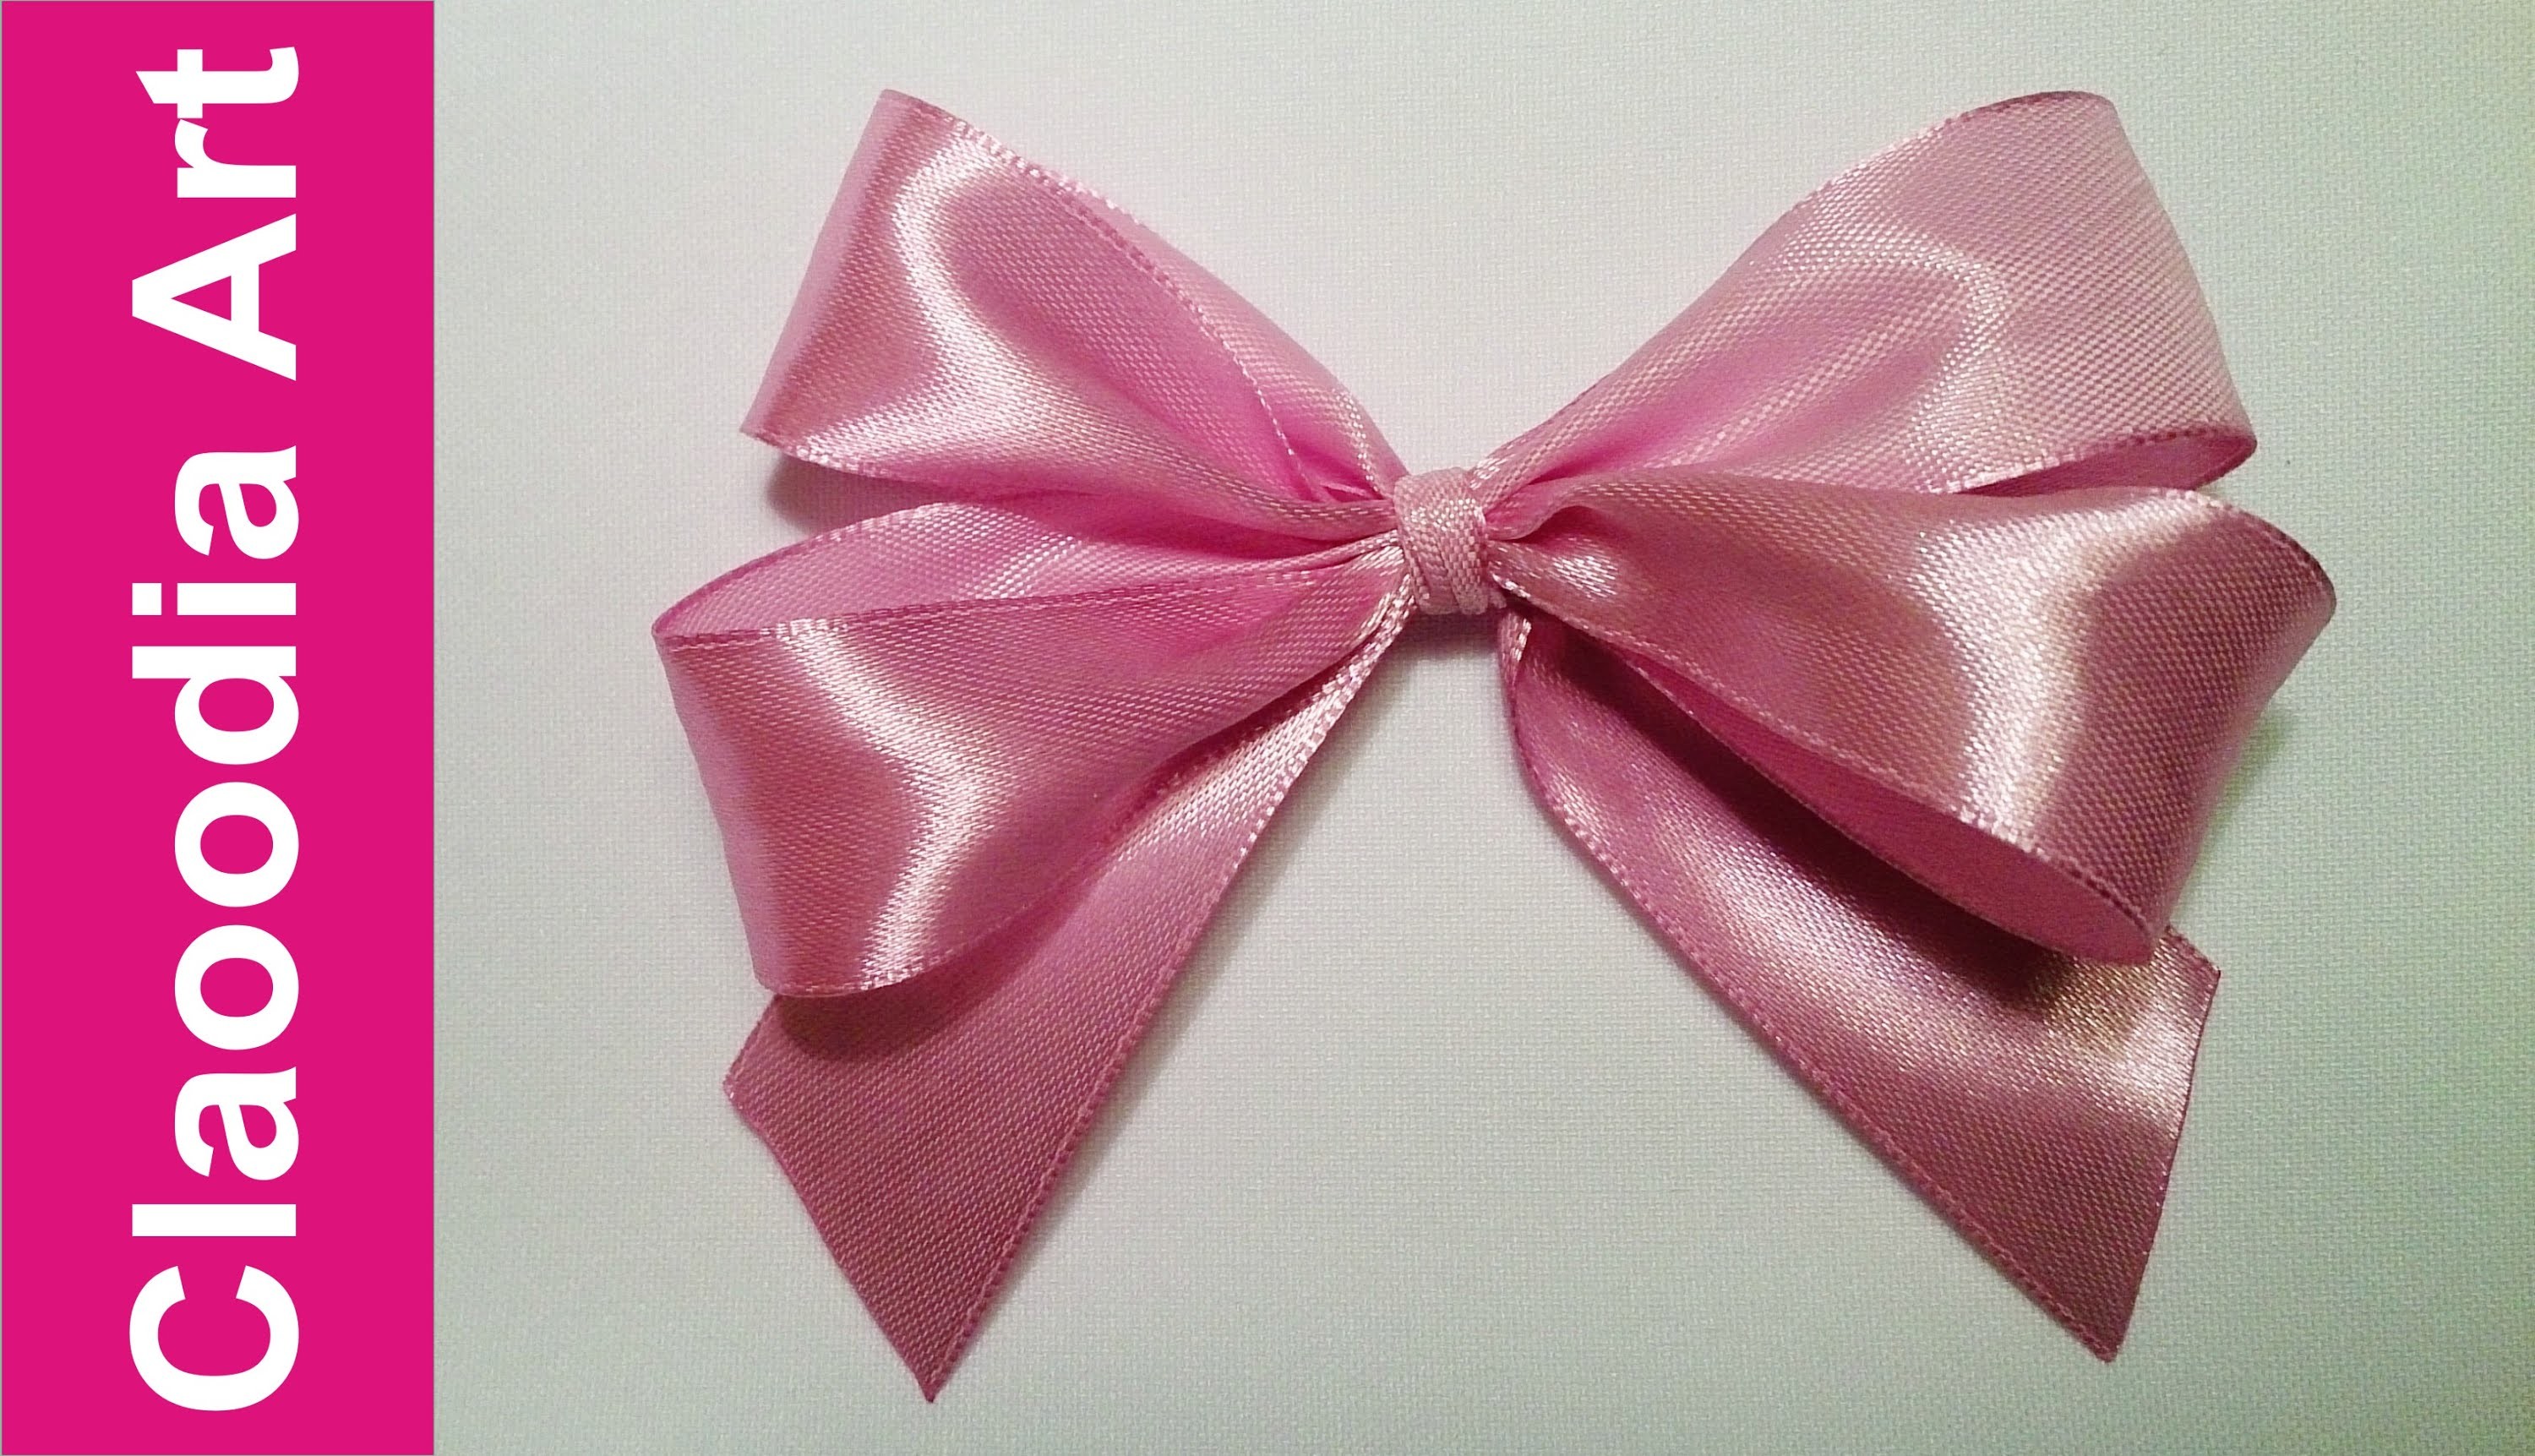 Podwójna kokardka, krok po kroku (simple double bow, ribbon)